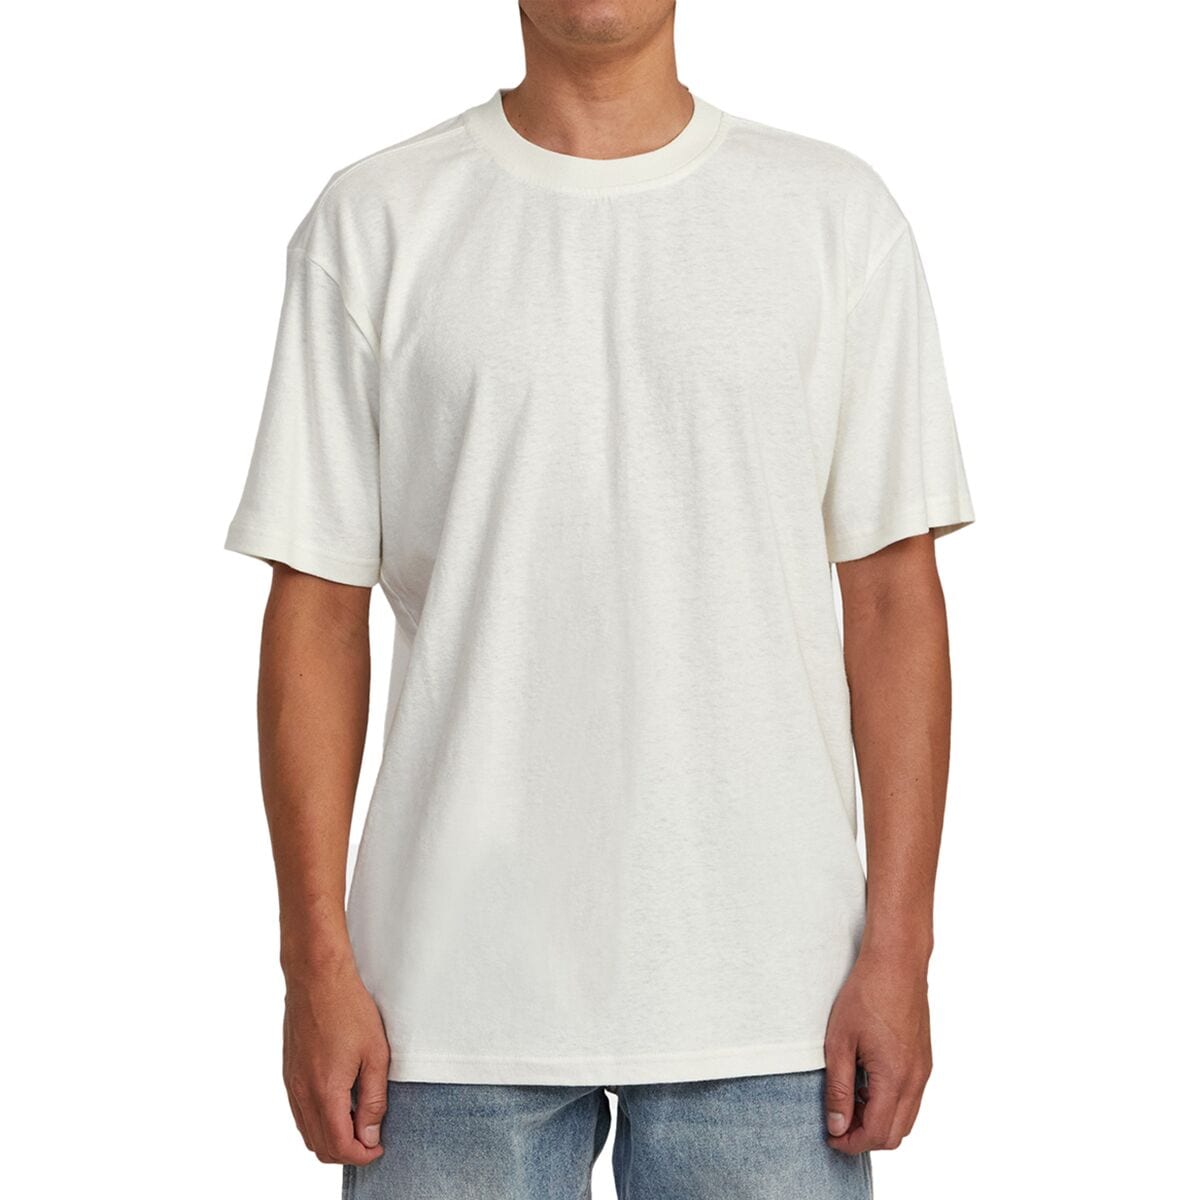 RVCA Hi Grade Hemp Short-Sleeve T-Shirt - Men's